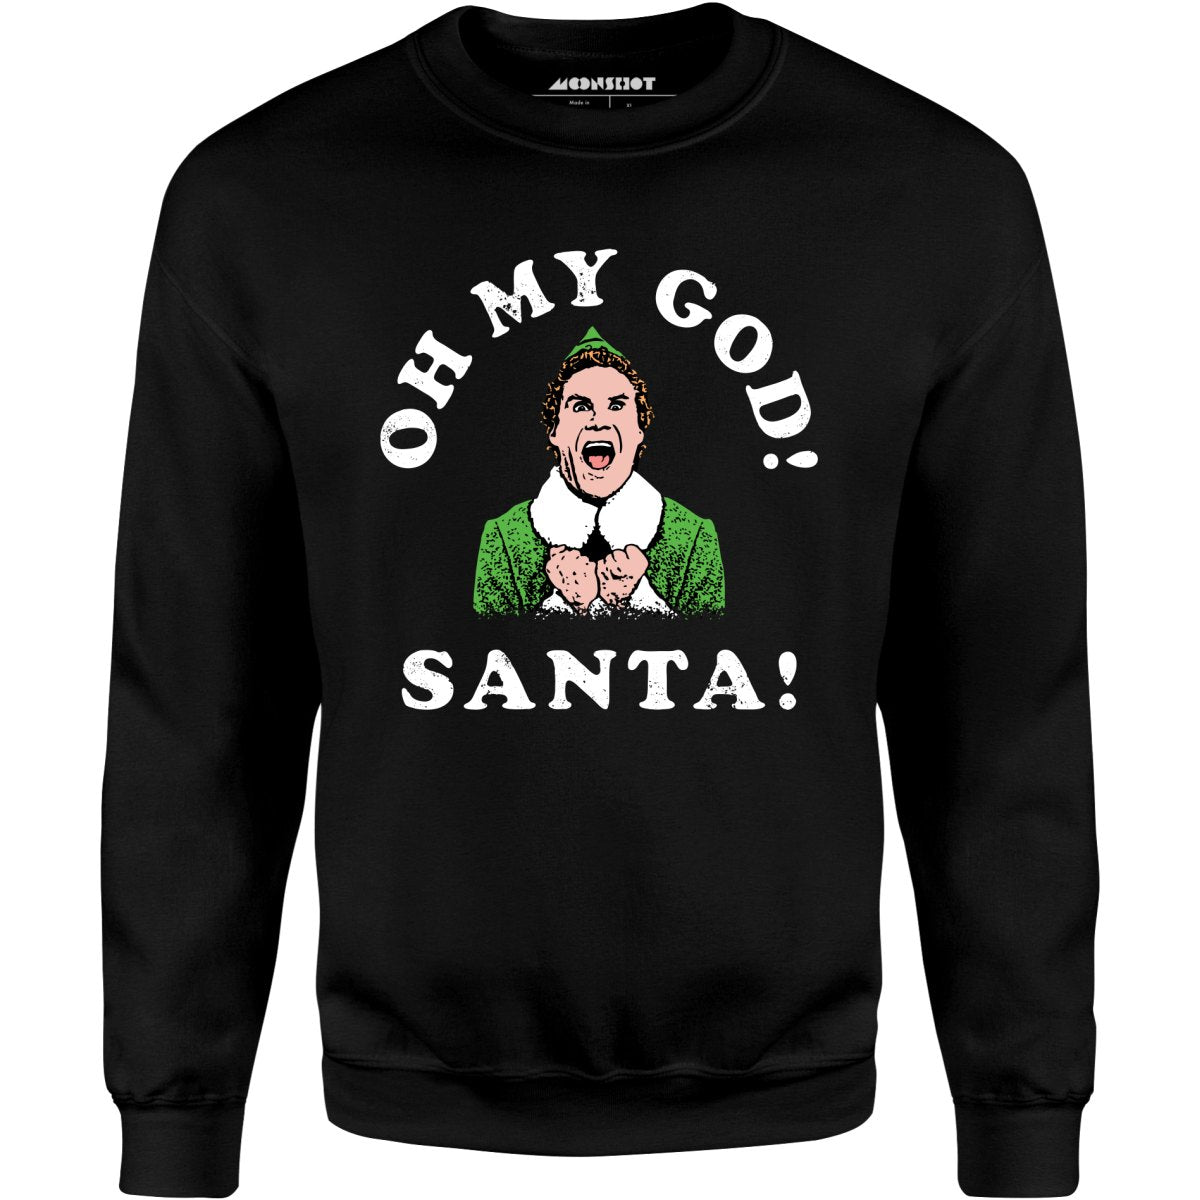 Oh My God Santa! - Unisex Sweatshirt